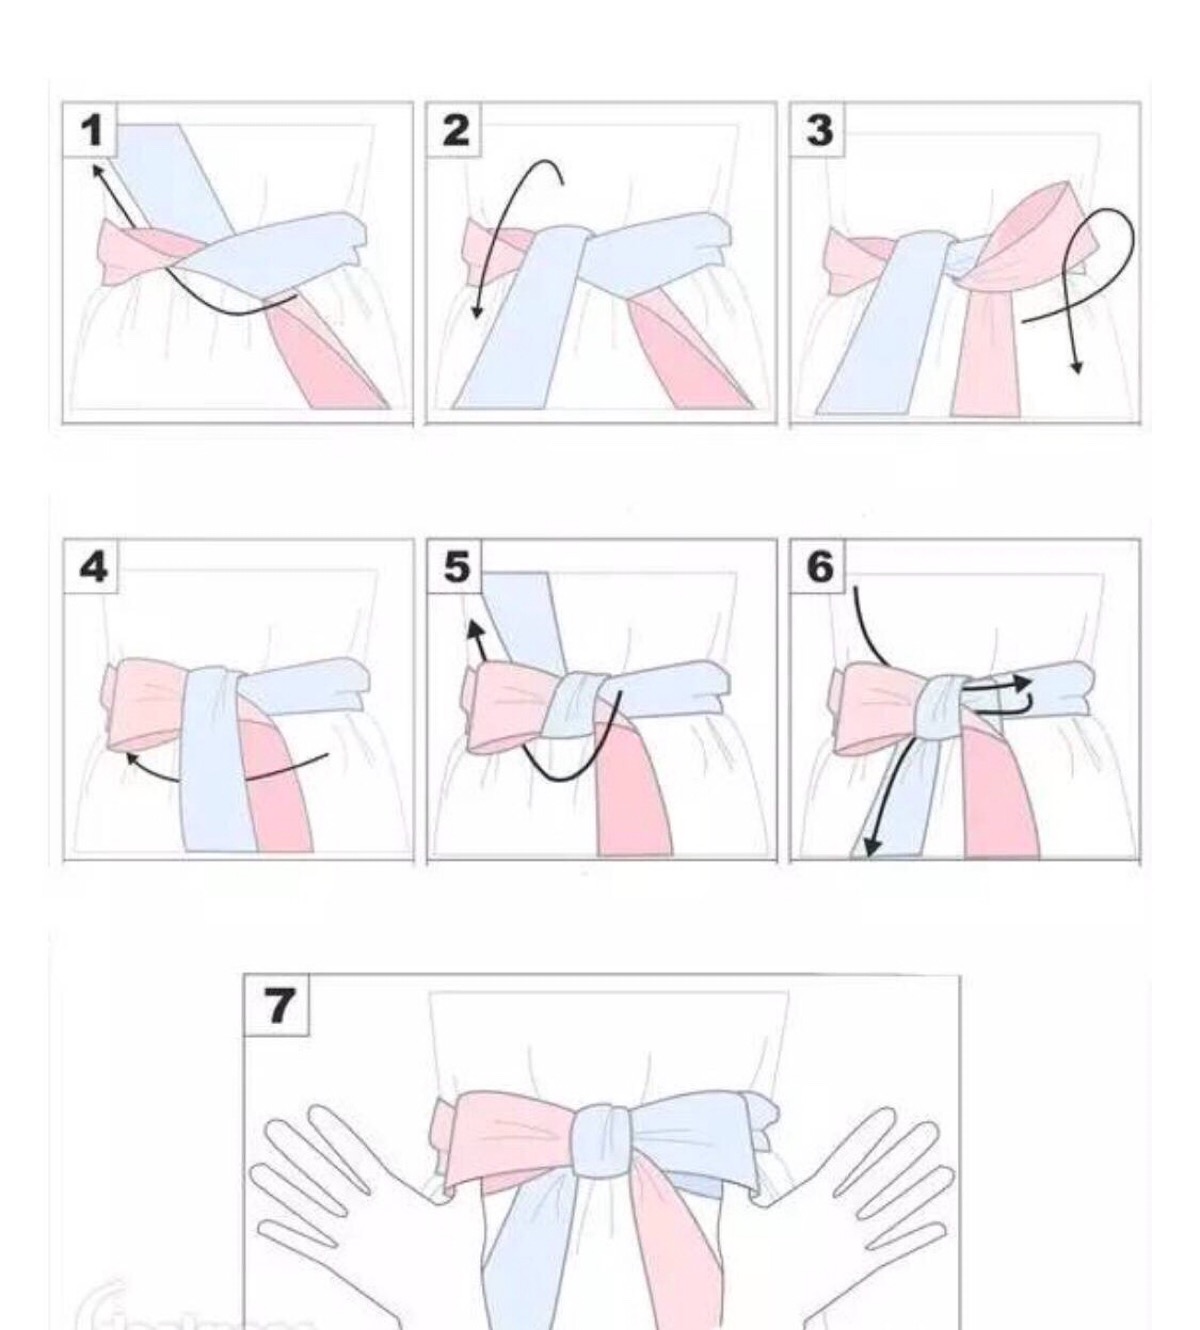 腰带蝴蝶结的系法图解图片